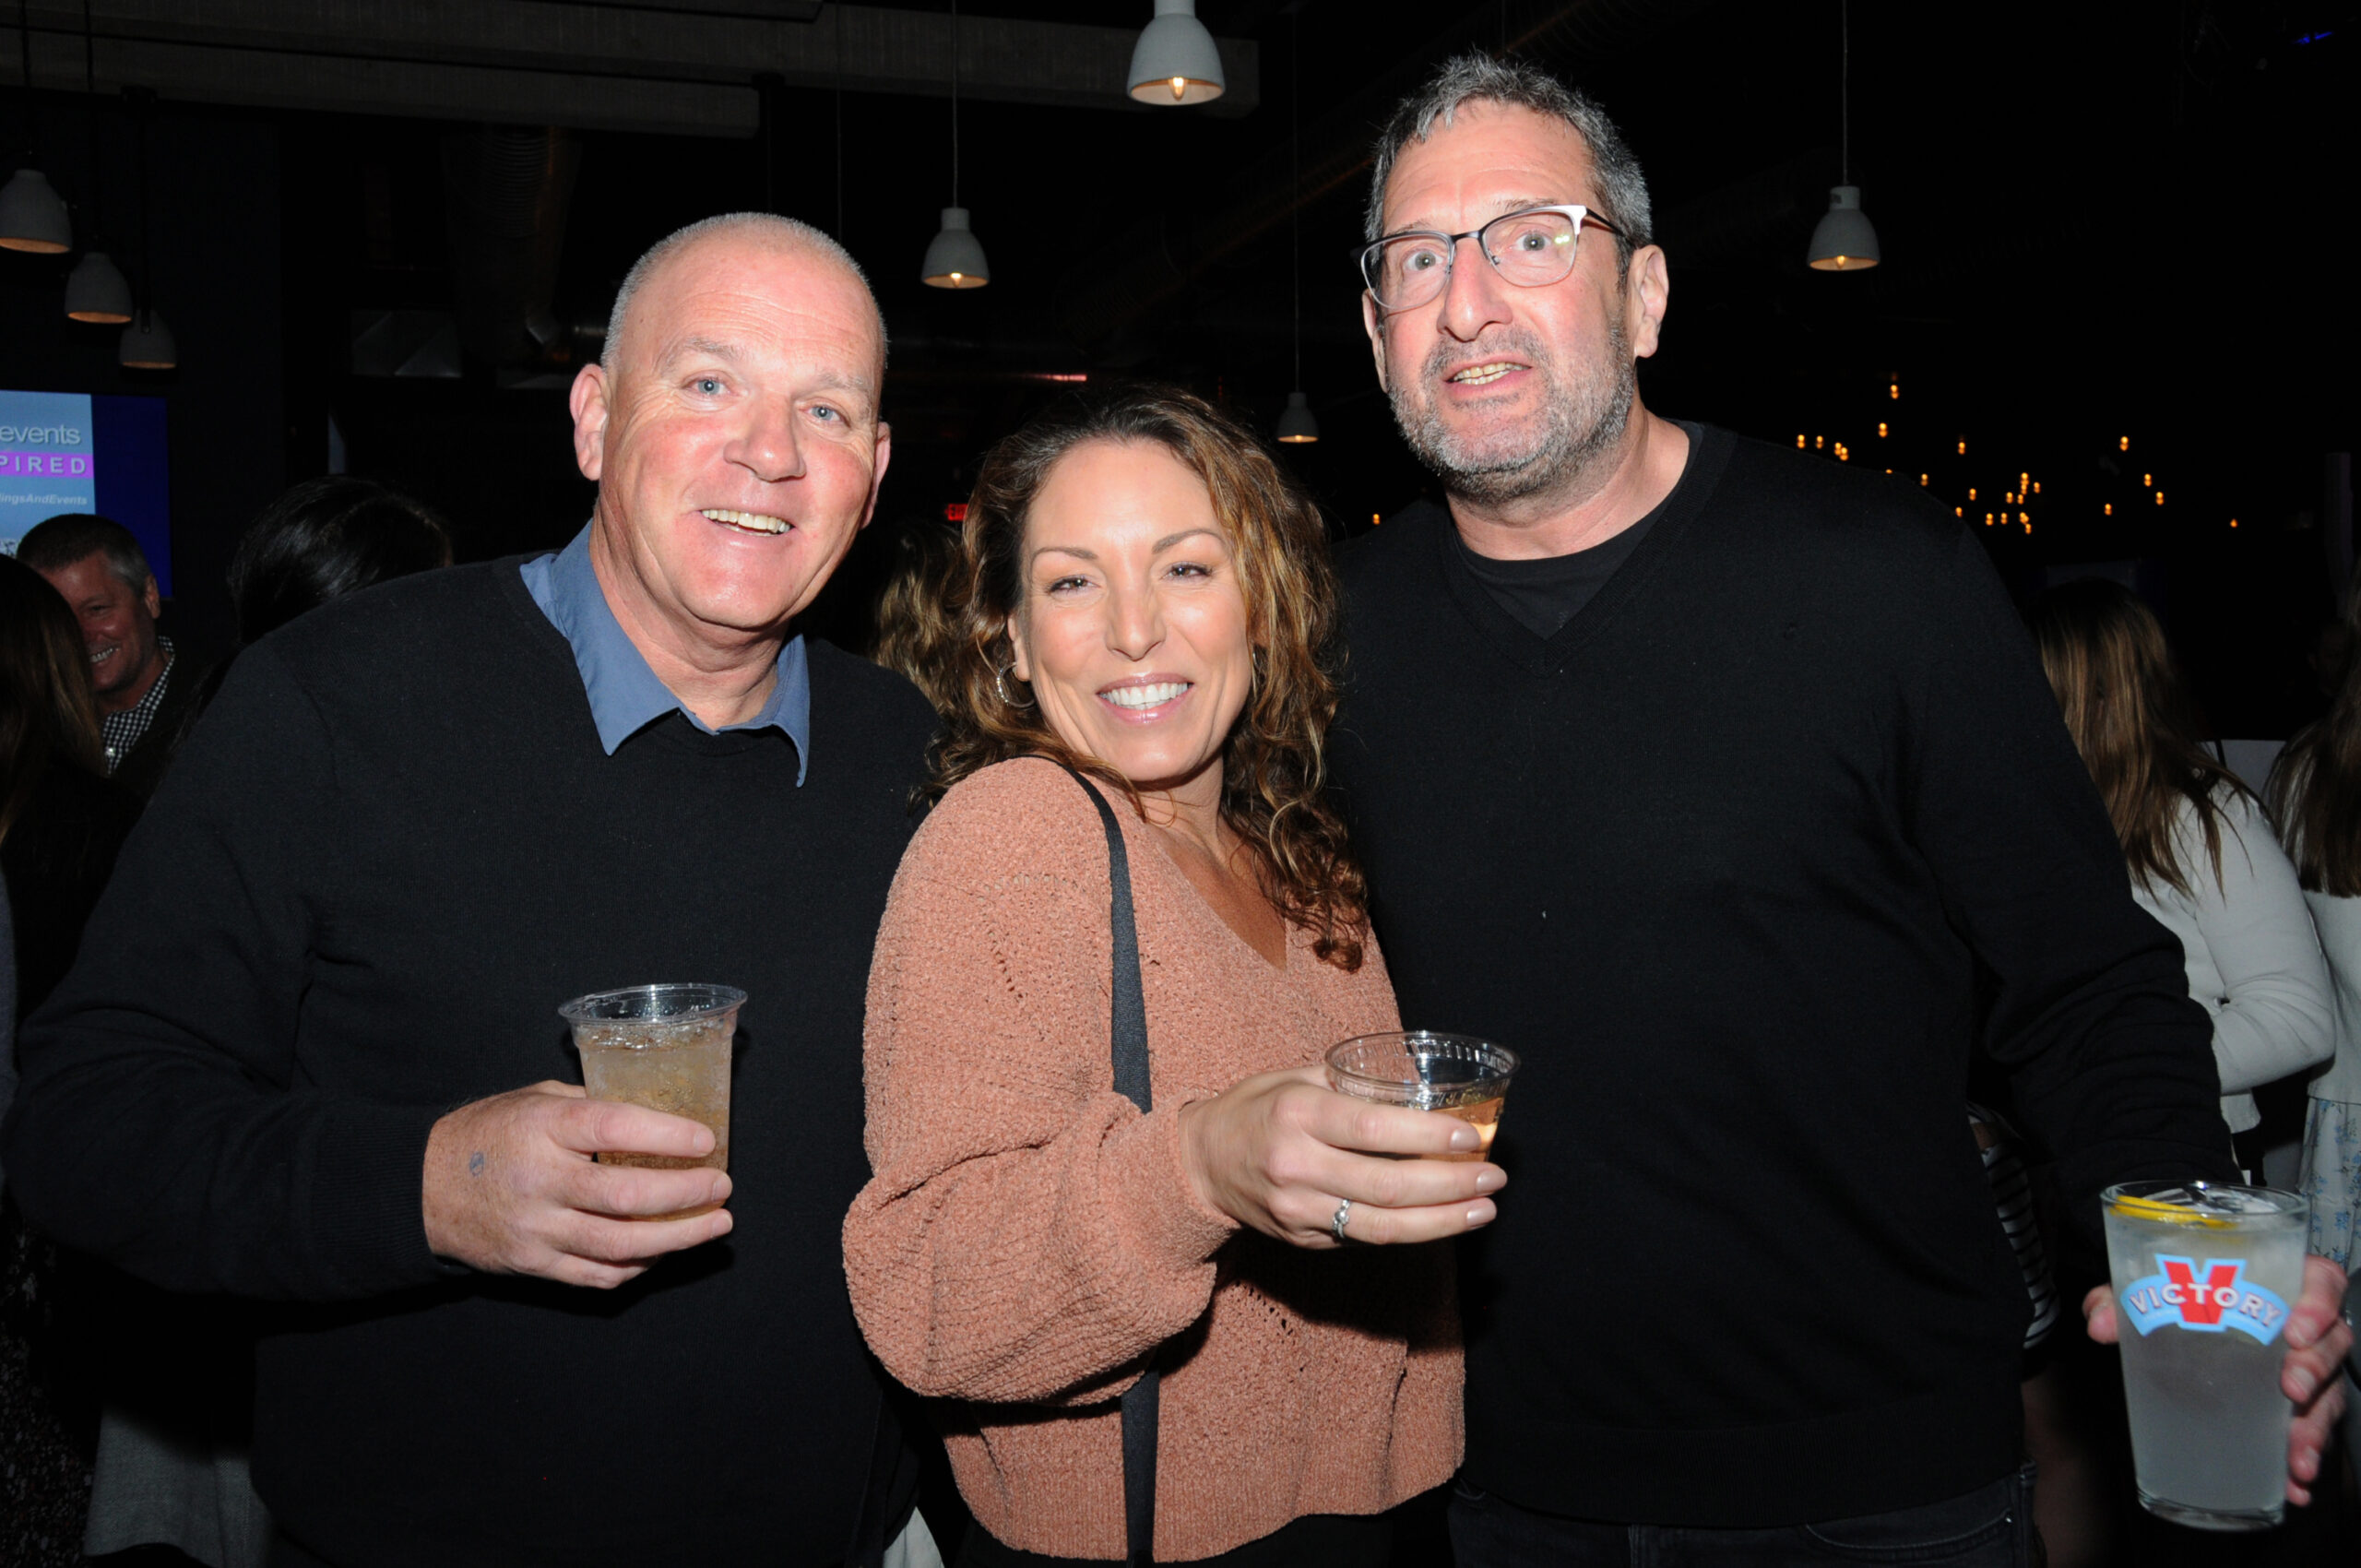 Sean Kiely, Stephanie Balabaniek and Scott Rubenstein at the Katy's Courage winter tasting fundraiser, 